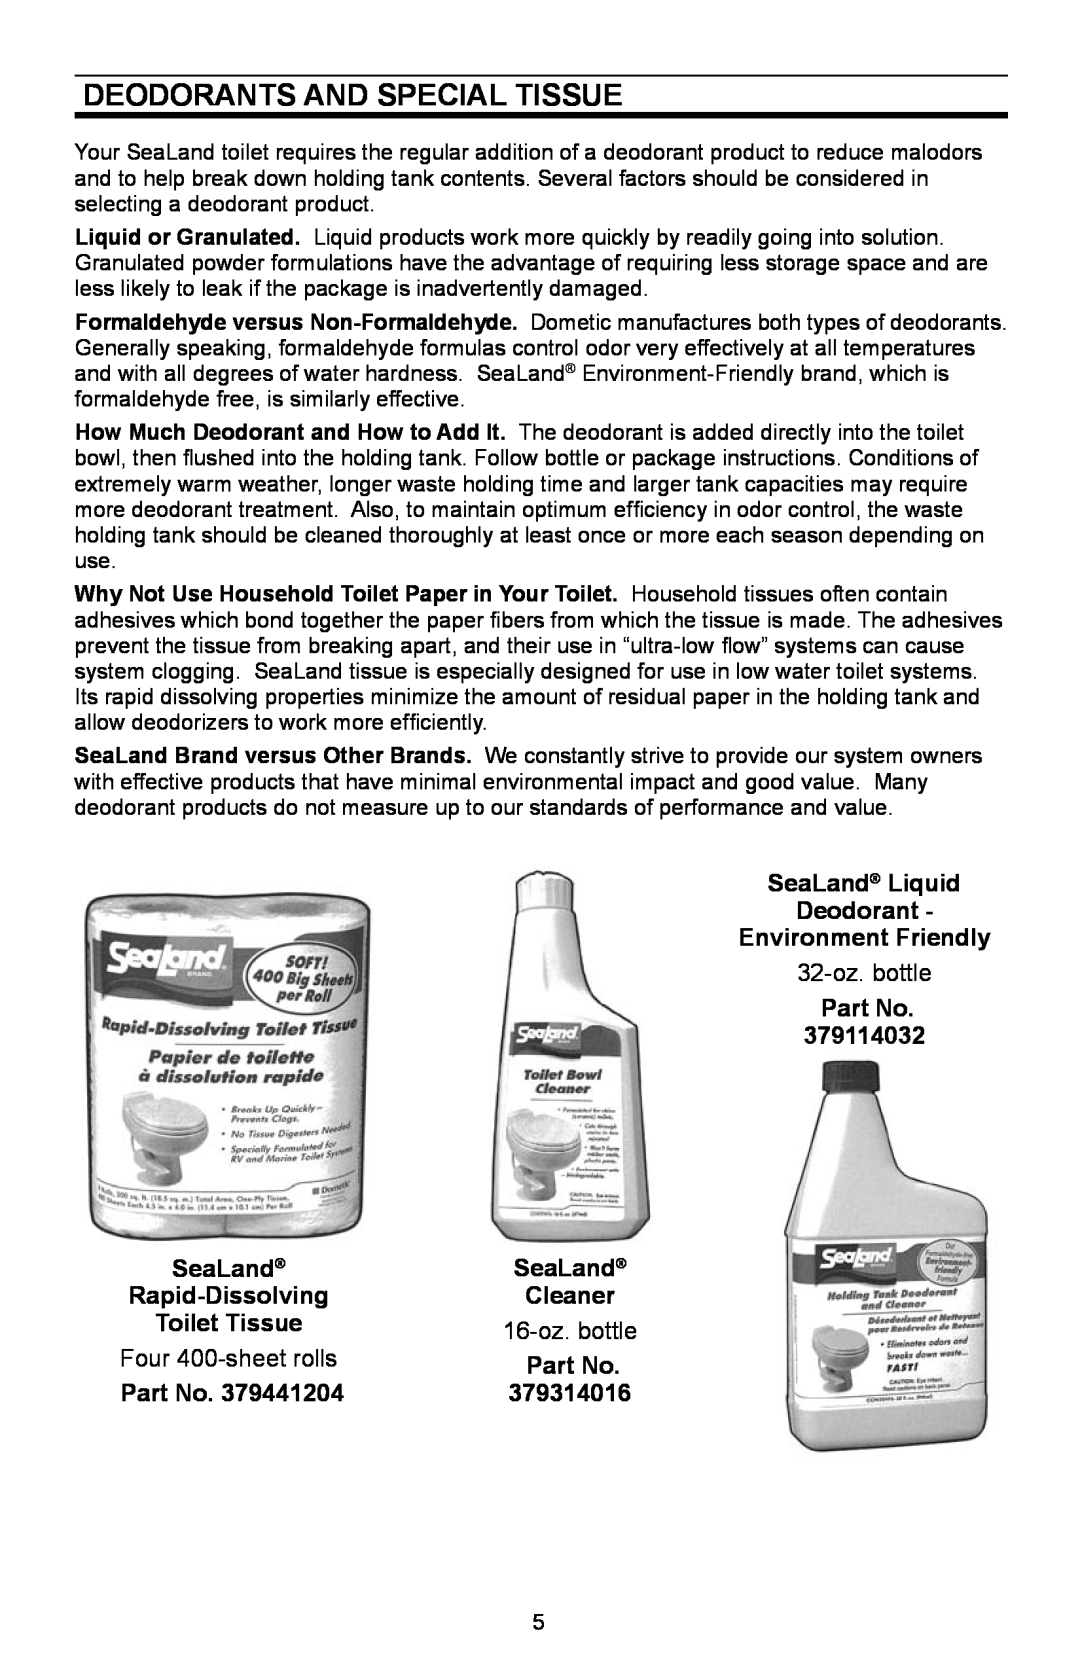 Dometic 210 Deodorants and Special Tissue, SeaLand Liquid Deodorant Environment Friendly, 32-oz. bottle, Rapid-Dissolving 